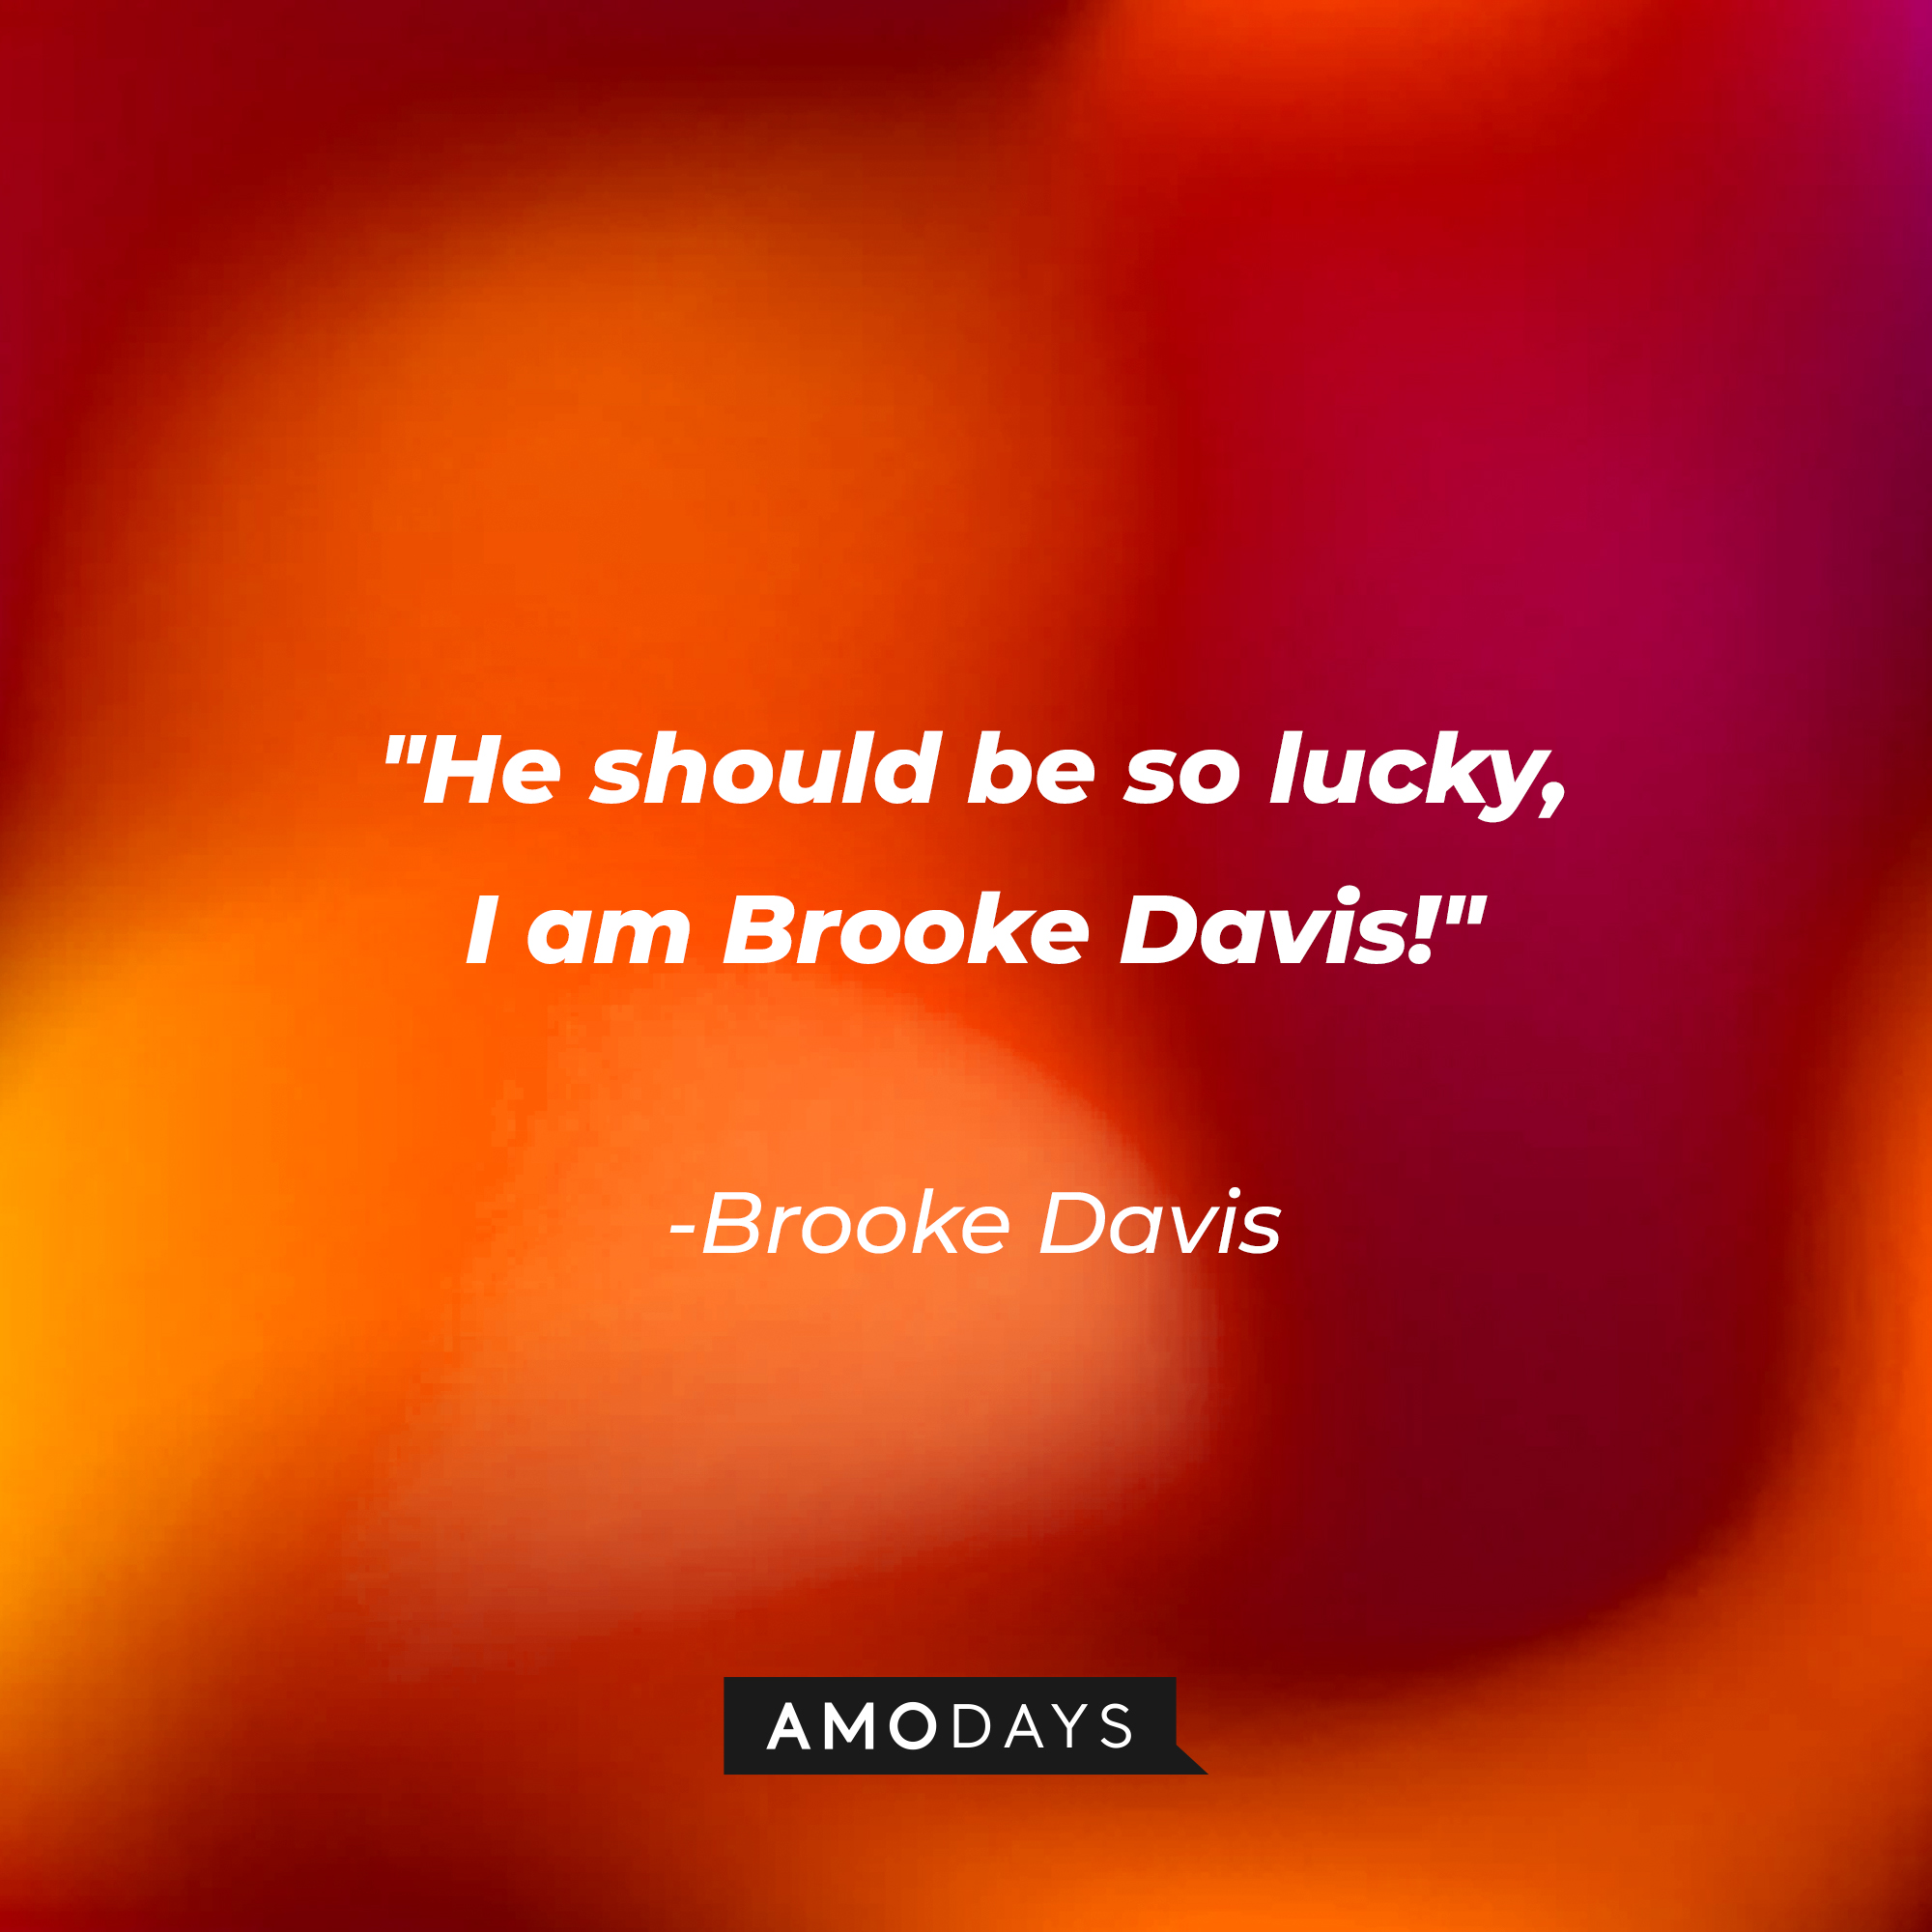 Brooke Davis' quote: "He should be so lucky, I am Brooke Davis!" | Source: AmoDays